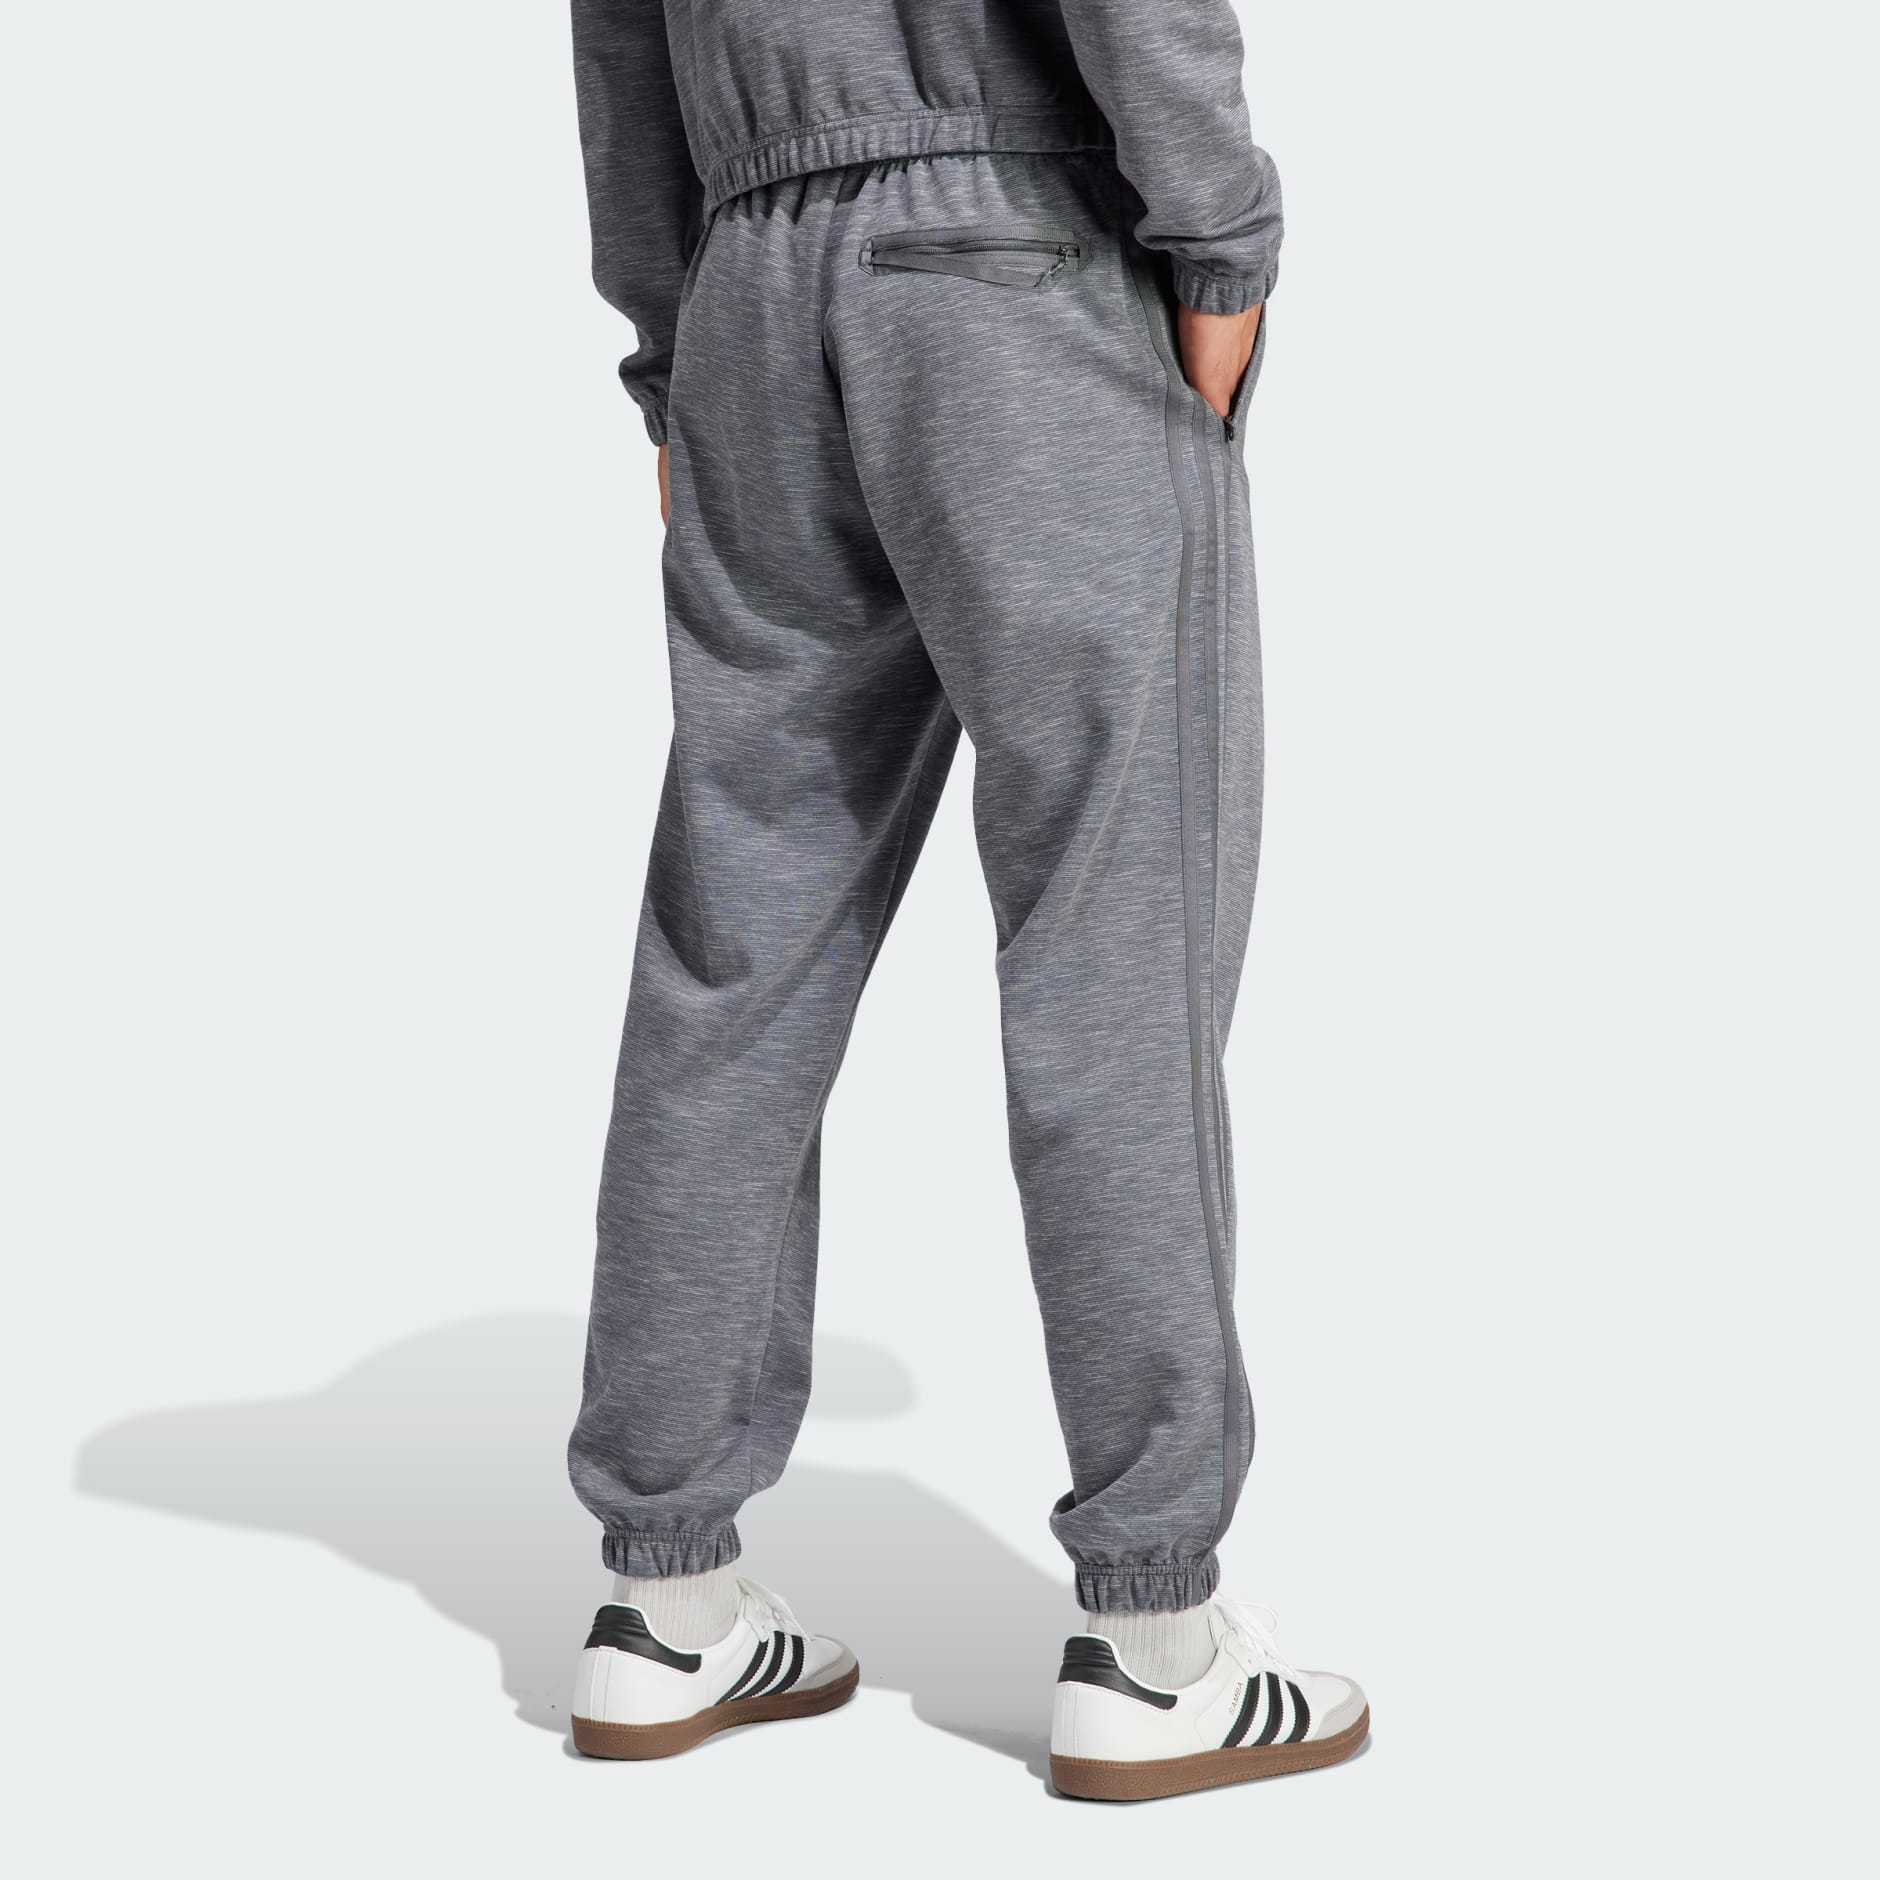 Scottsdale Track Pants - Gray - 2XL Gorilla Wear